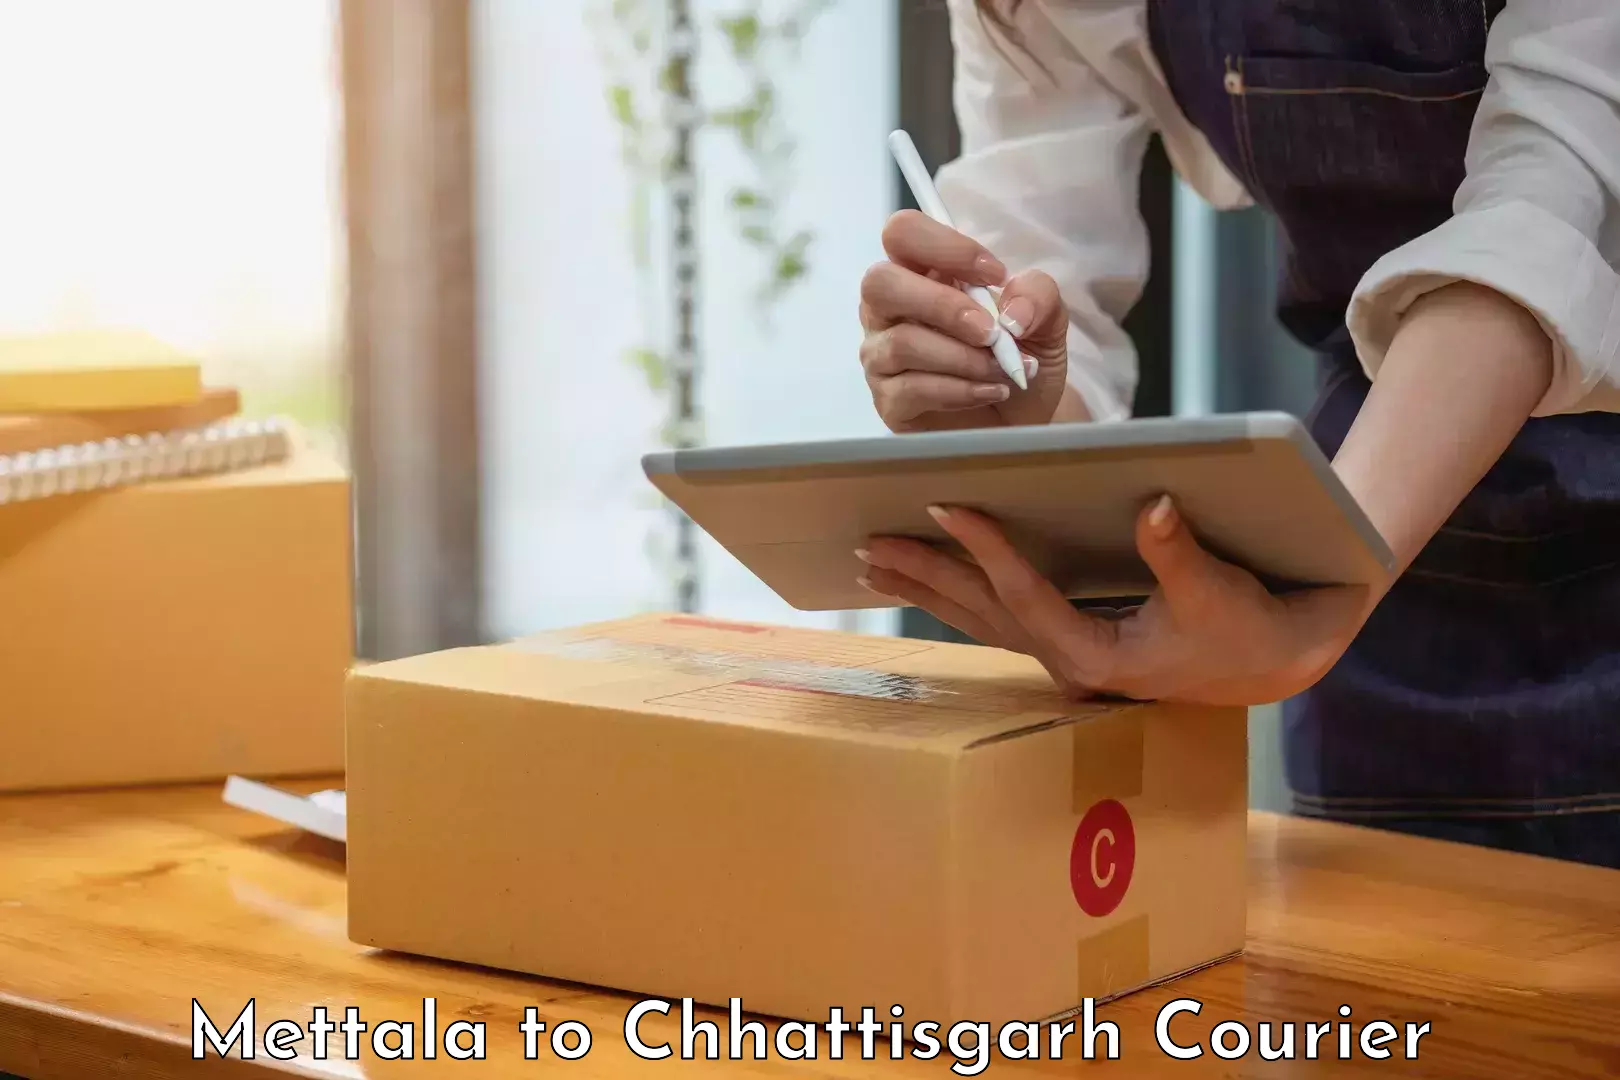 Express delivery network Mettala to Chhattisgarh